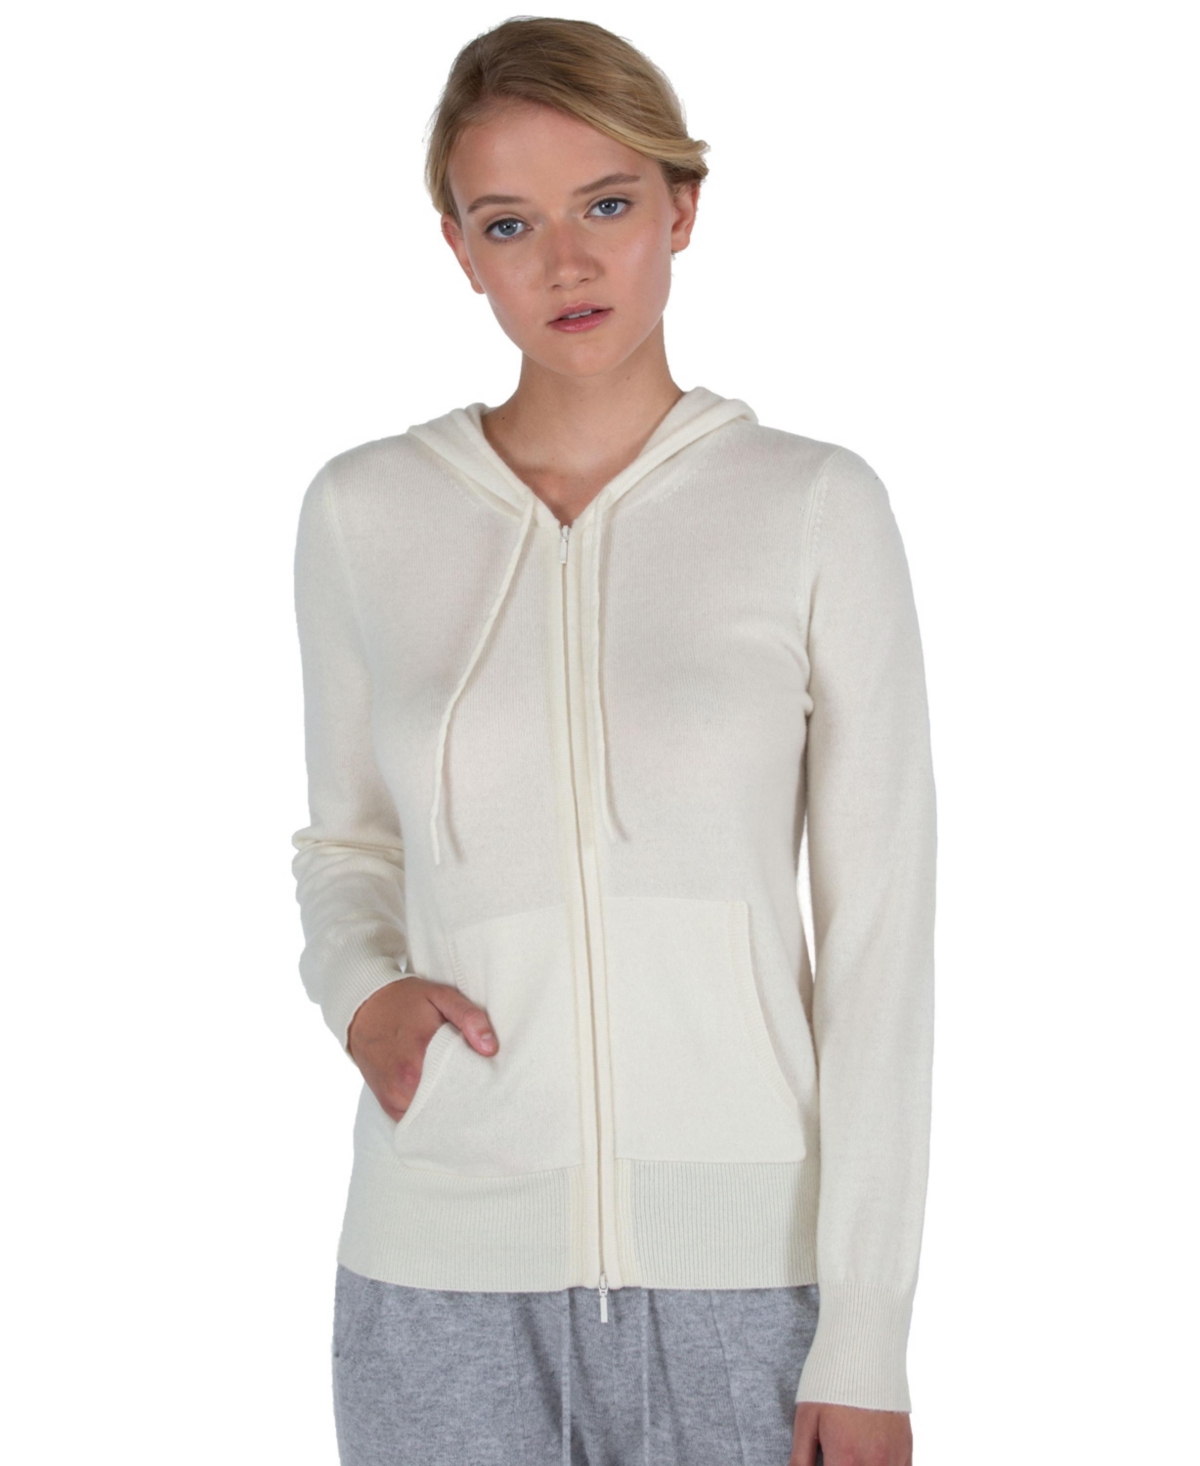 Women's 100% Pure Cashmere Long Sleeve Zip Hoodie Cardigan Sweater (1573, Petal Pink, Medium ) - Petal pink